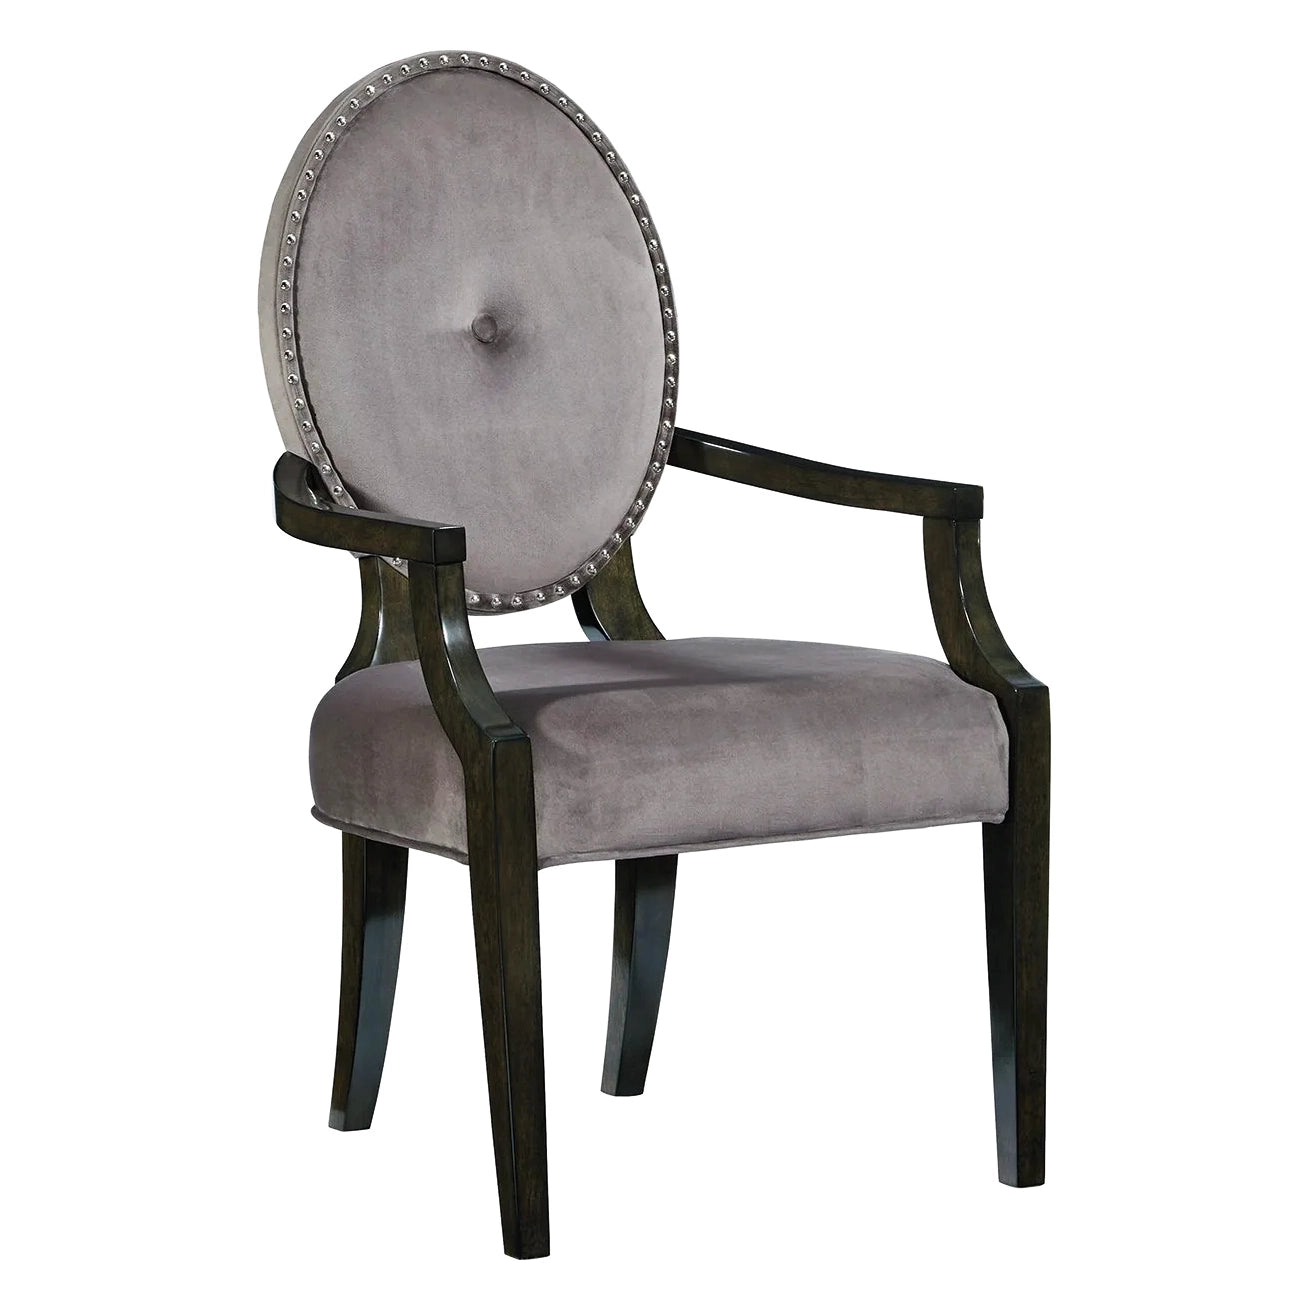 Essex Arm Chair